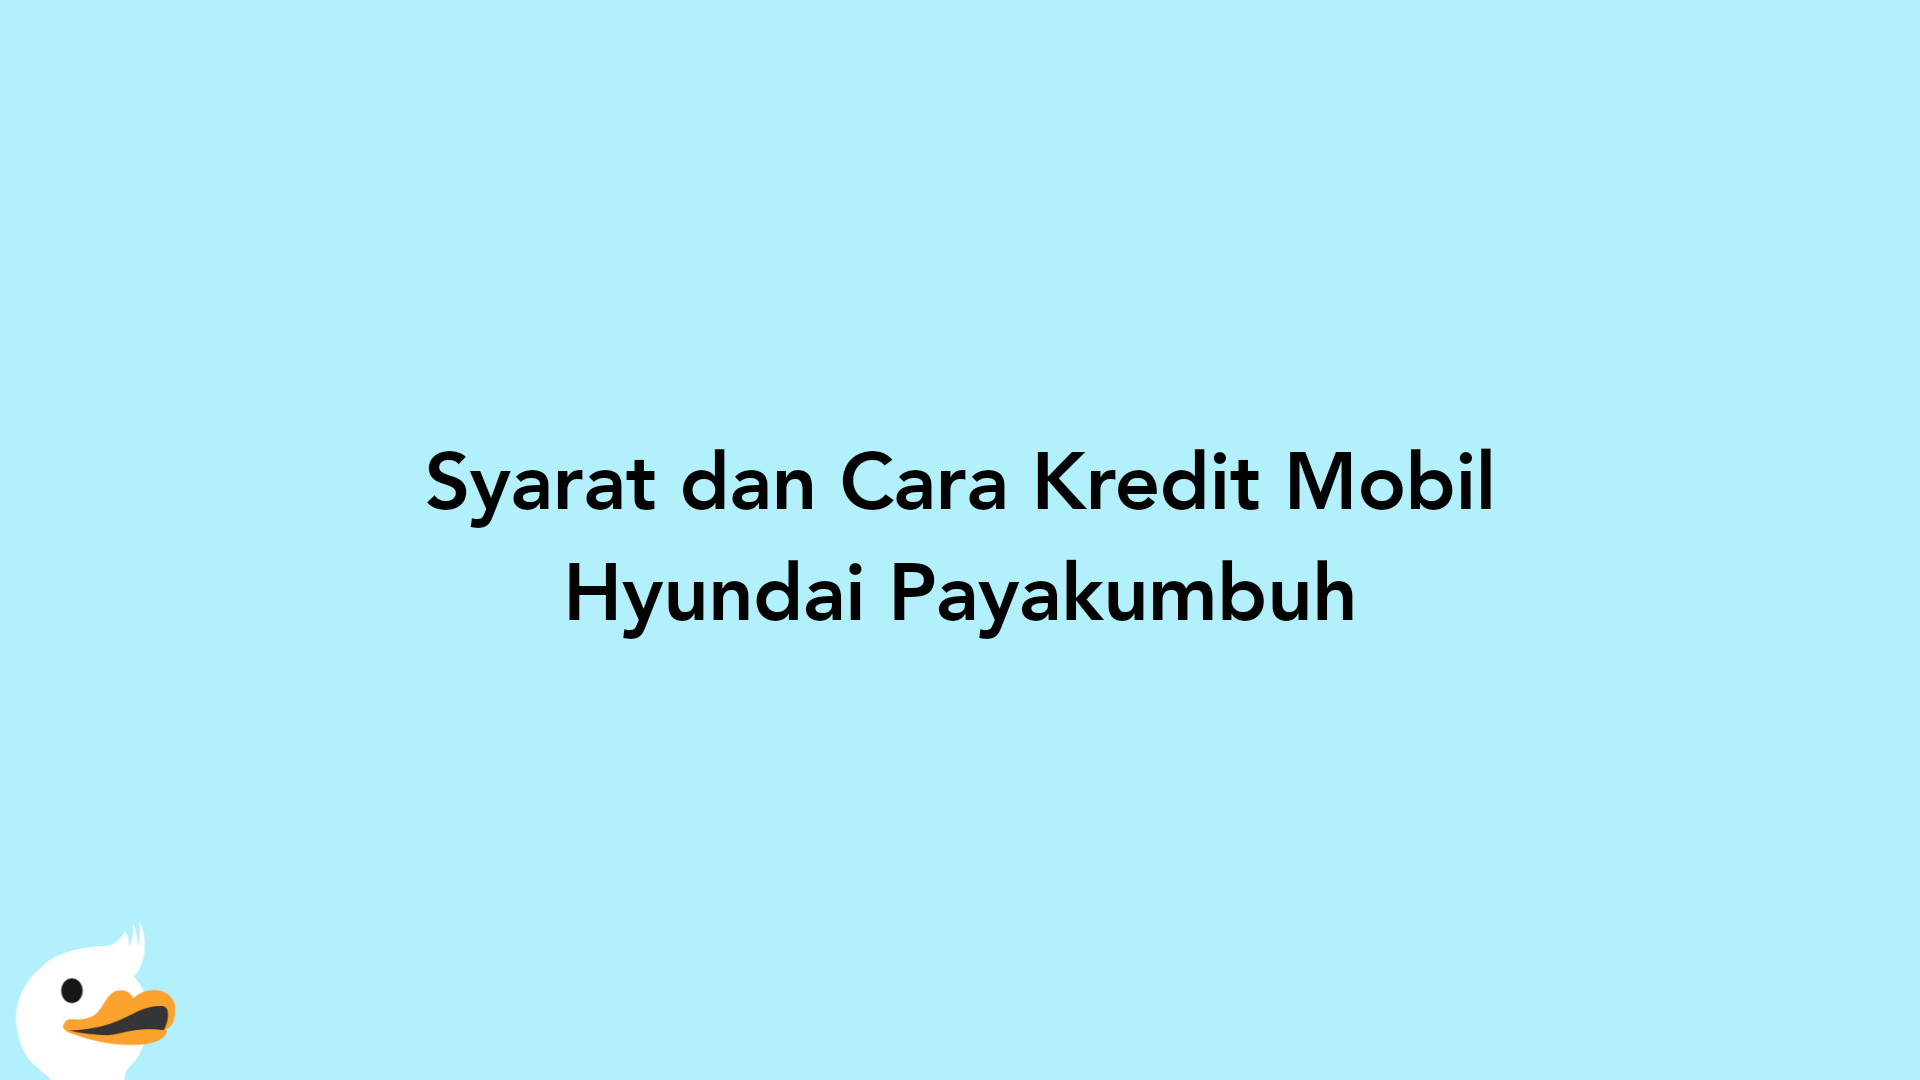 Syarat dan Cara Kredit Mobil Hyundai Payakumbuh